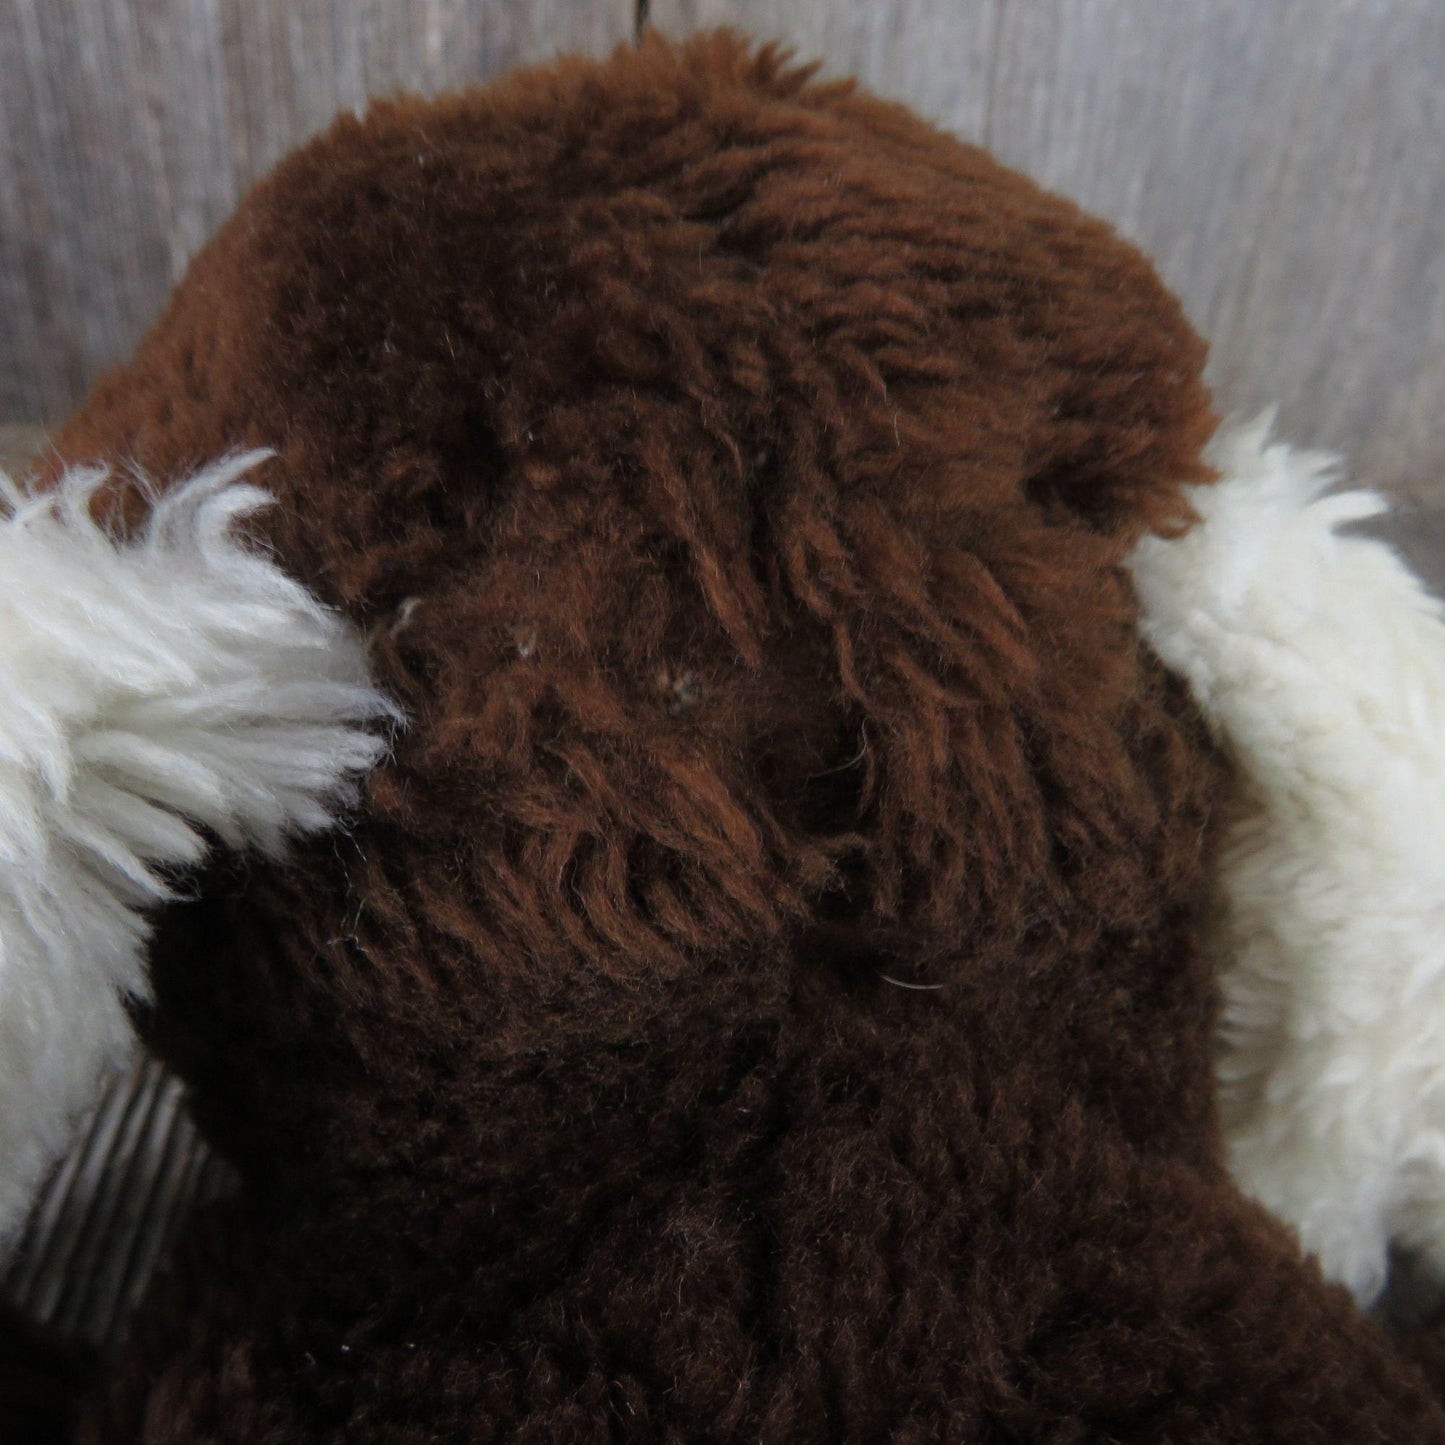 Vintage Brown Drooper Dog with White Ears Plush Dakin 1973 Korea Nut Filled Puppy Stuffed Animal